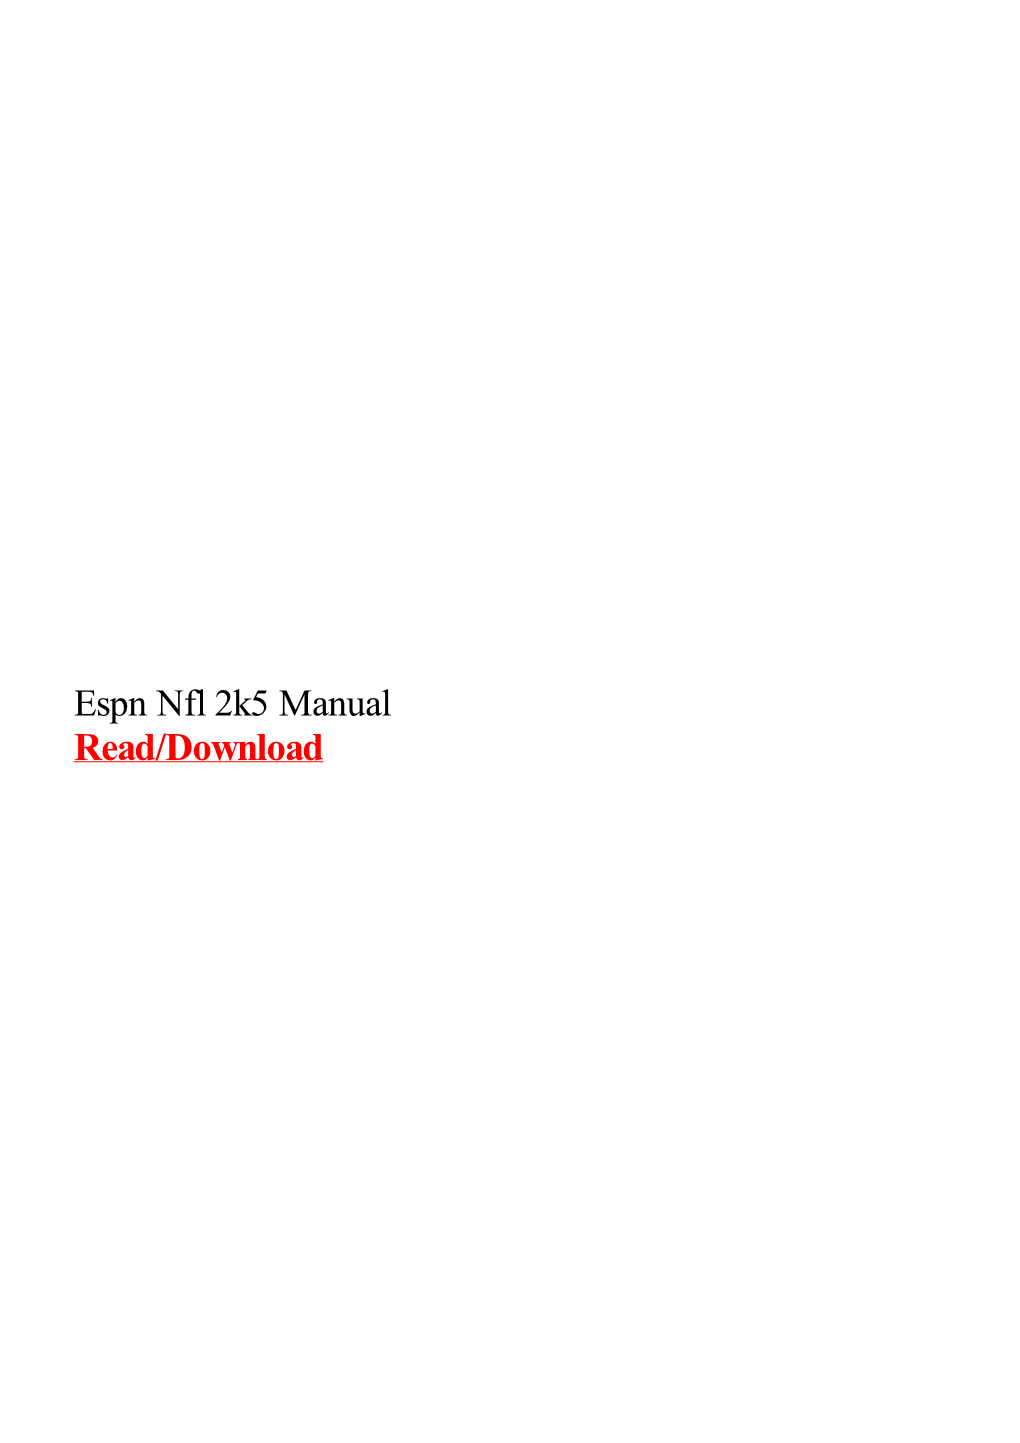 Espn Nfl 2K5 Manual